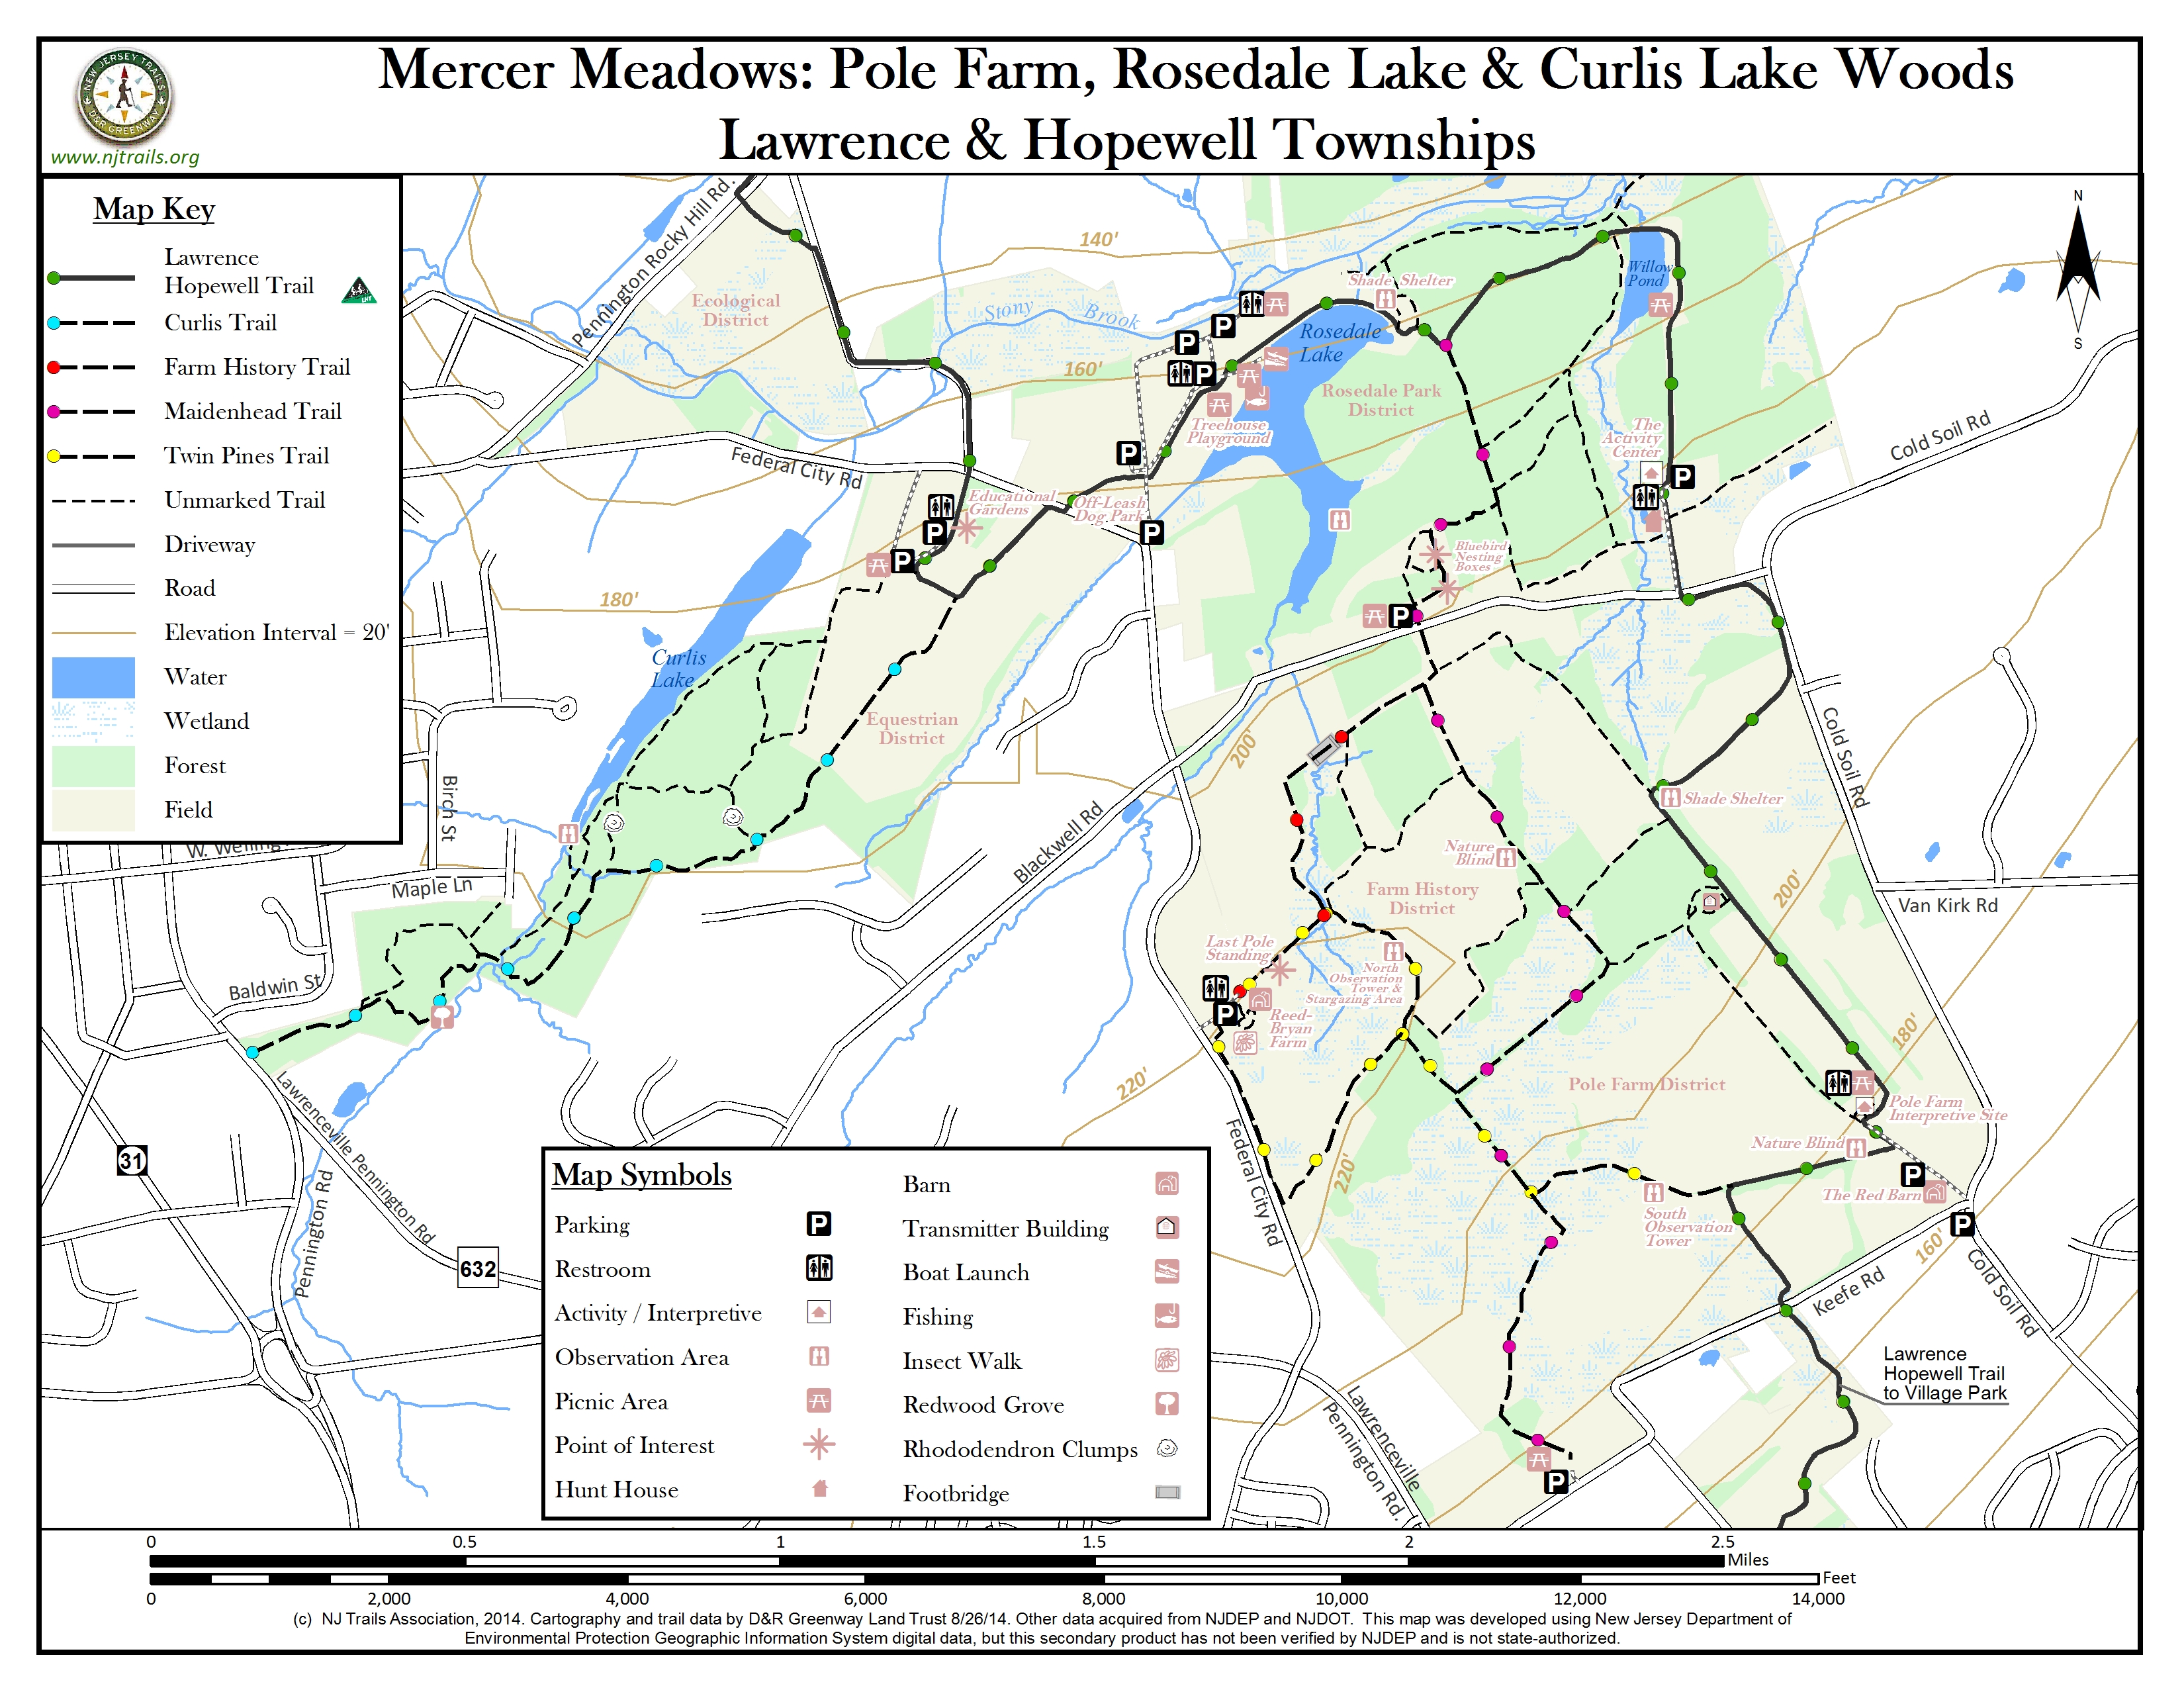 Mercer Meadows: Pole Farm, Rosedale Lake & Curlis Lake Woods